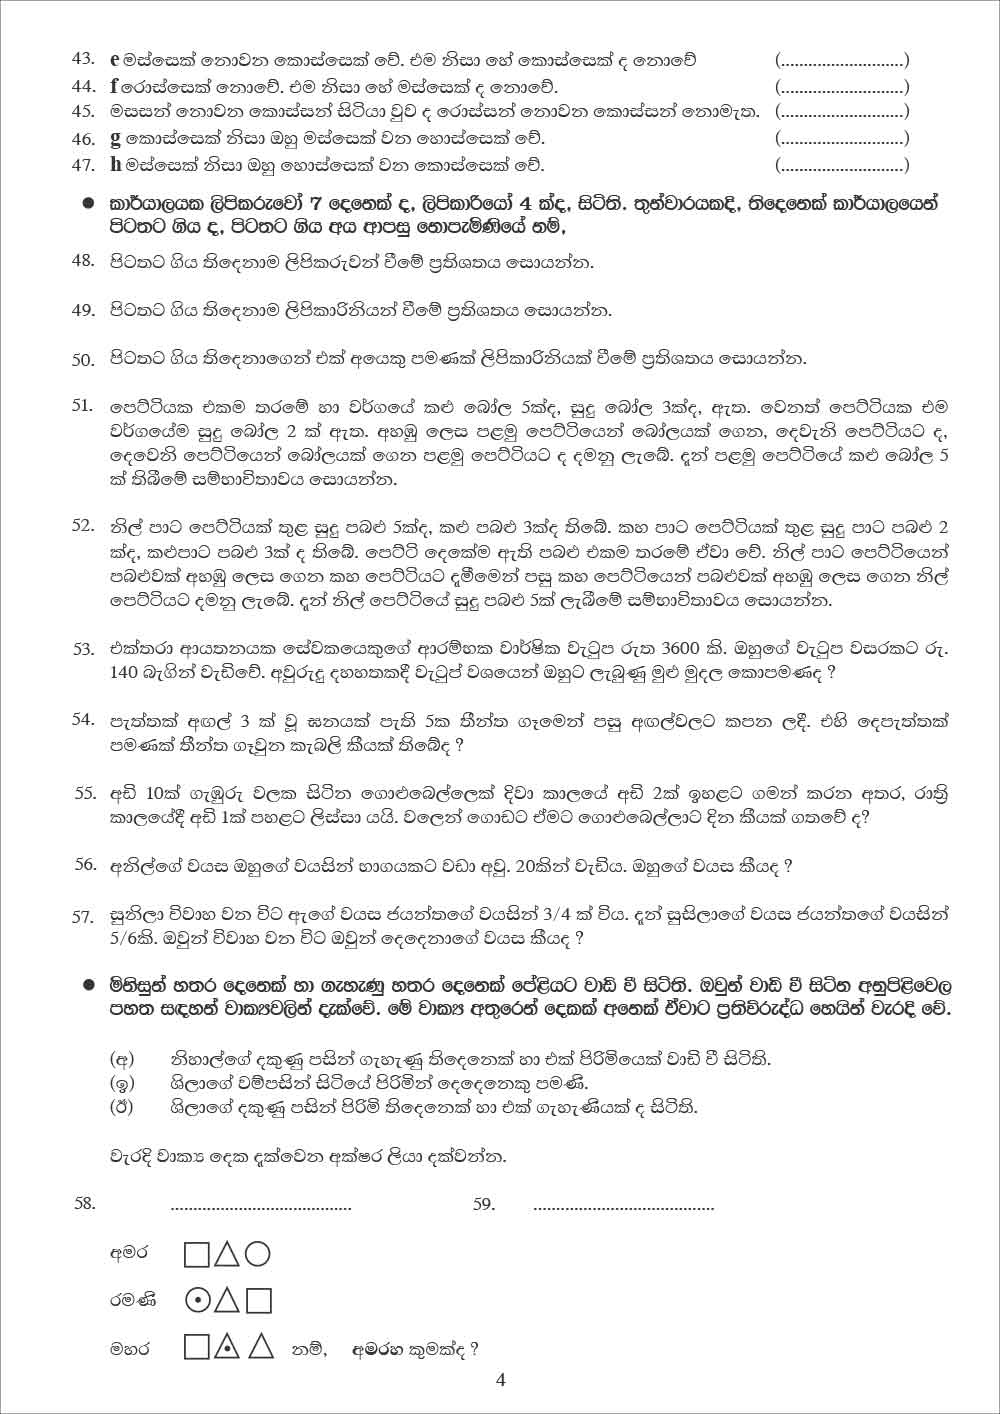 SLAS Pass Paper 04 by Anusha Gokula - General Knowledge in Sinhala 